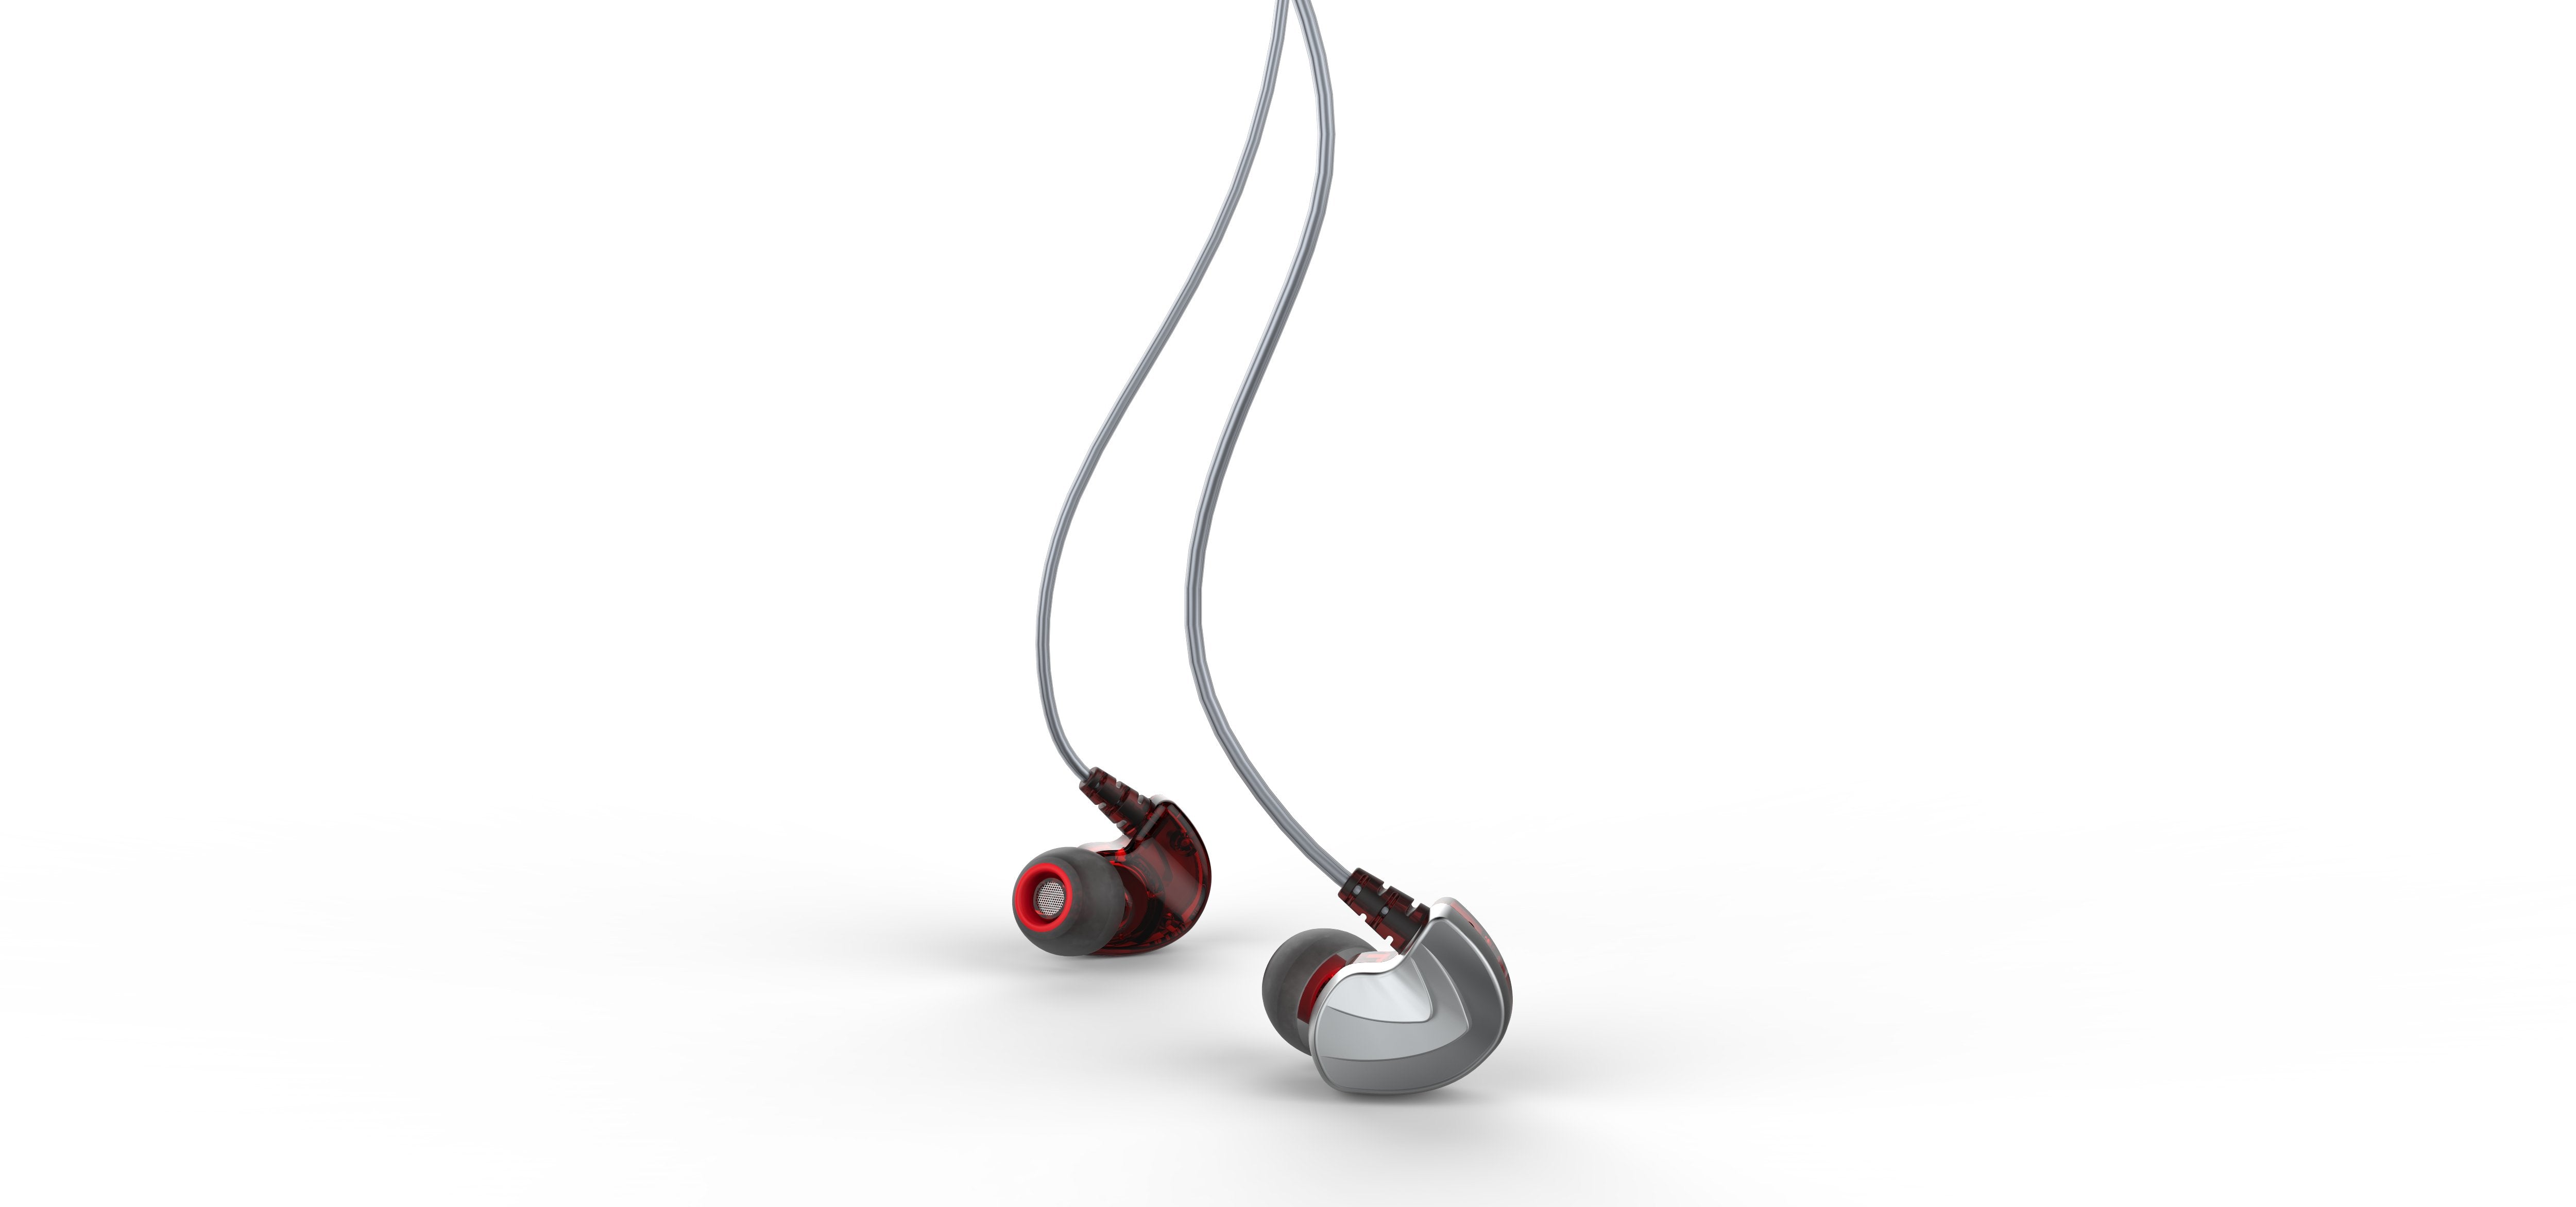 Buy FIDUE A73 - 2 way Hybrid In-Ear Earphones Earphone at HiFiNage in India with warranty.